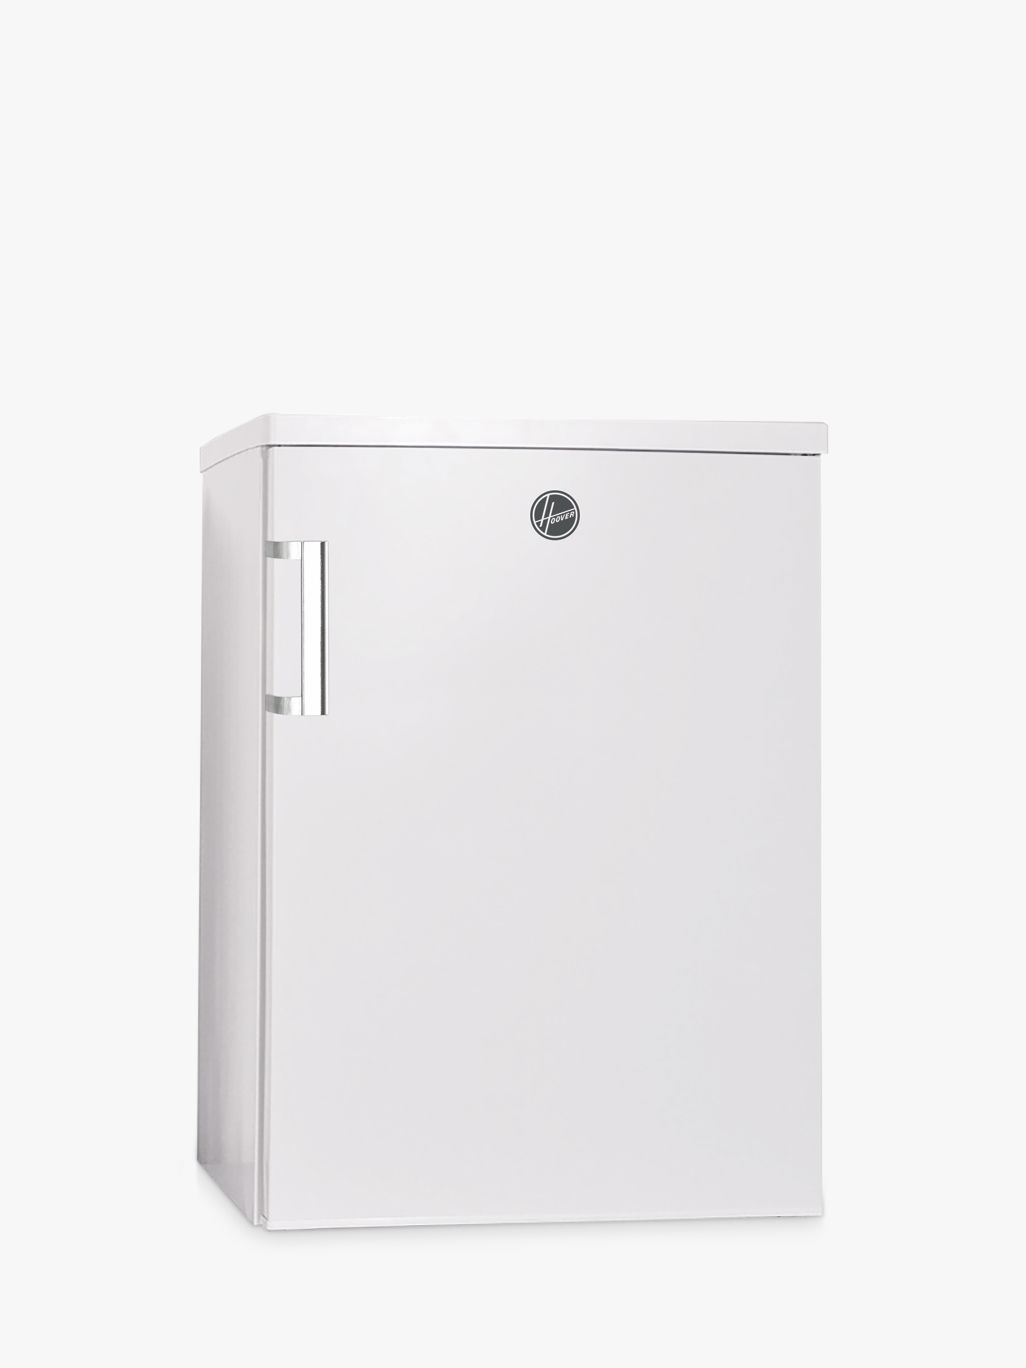 Hoover HKTUS604WHK Freestanding Undercounter Freezer, A+ Energy Rating, 60cm Wide, White